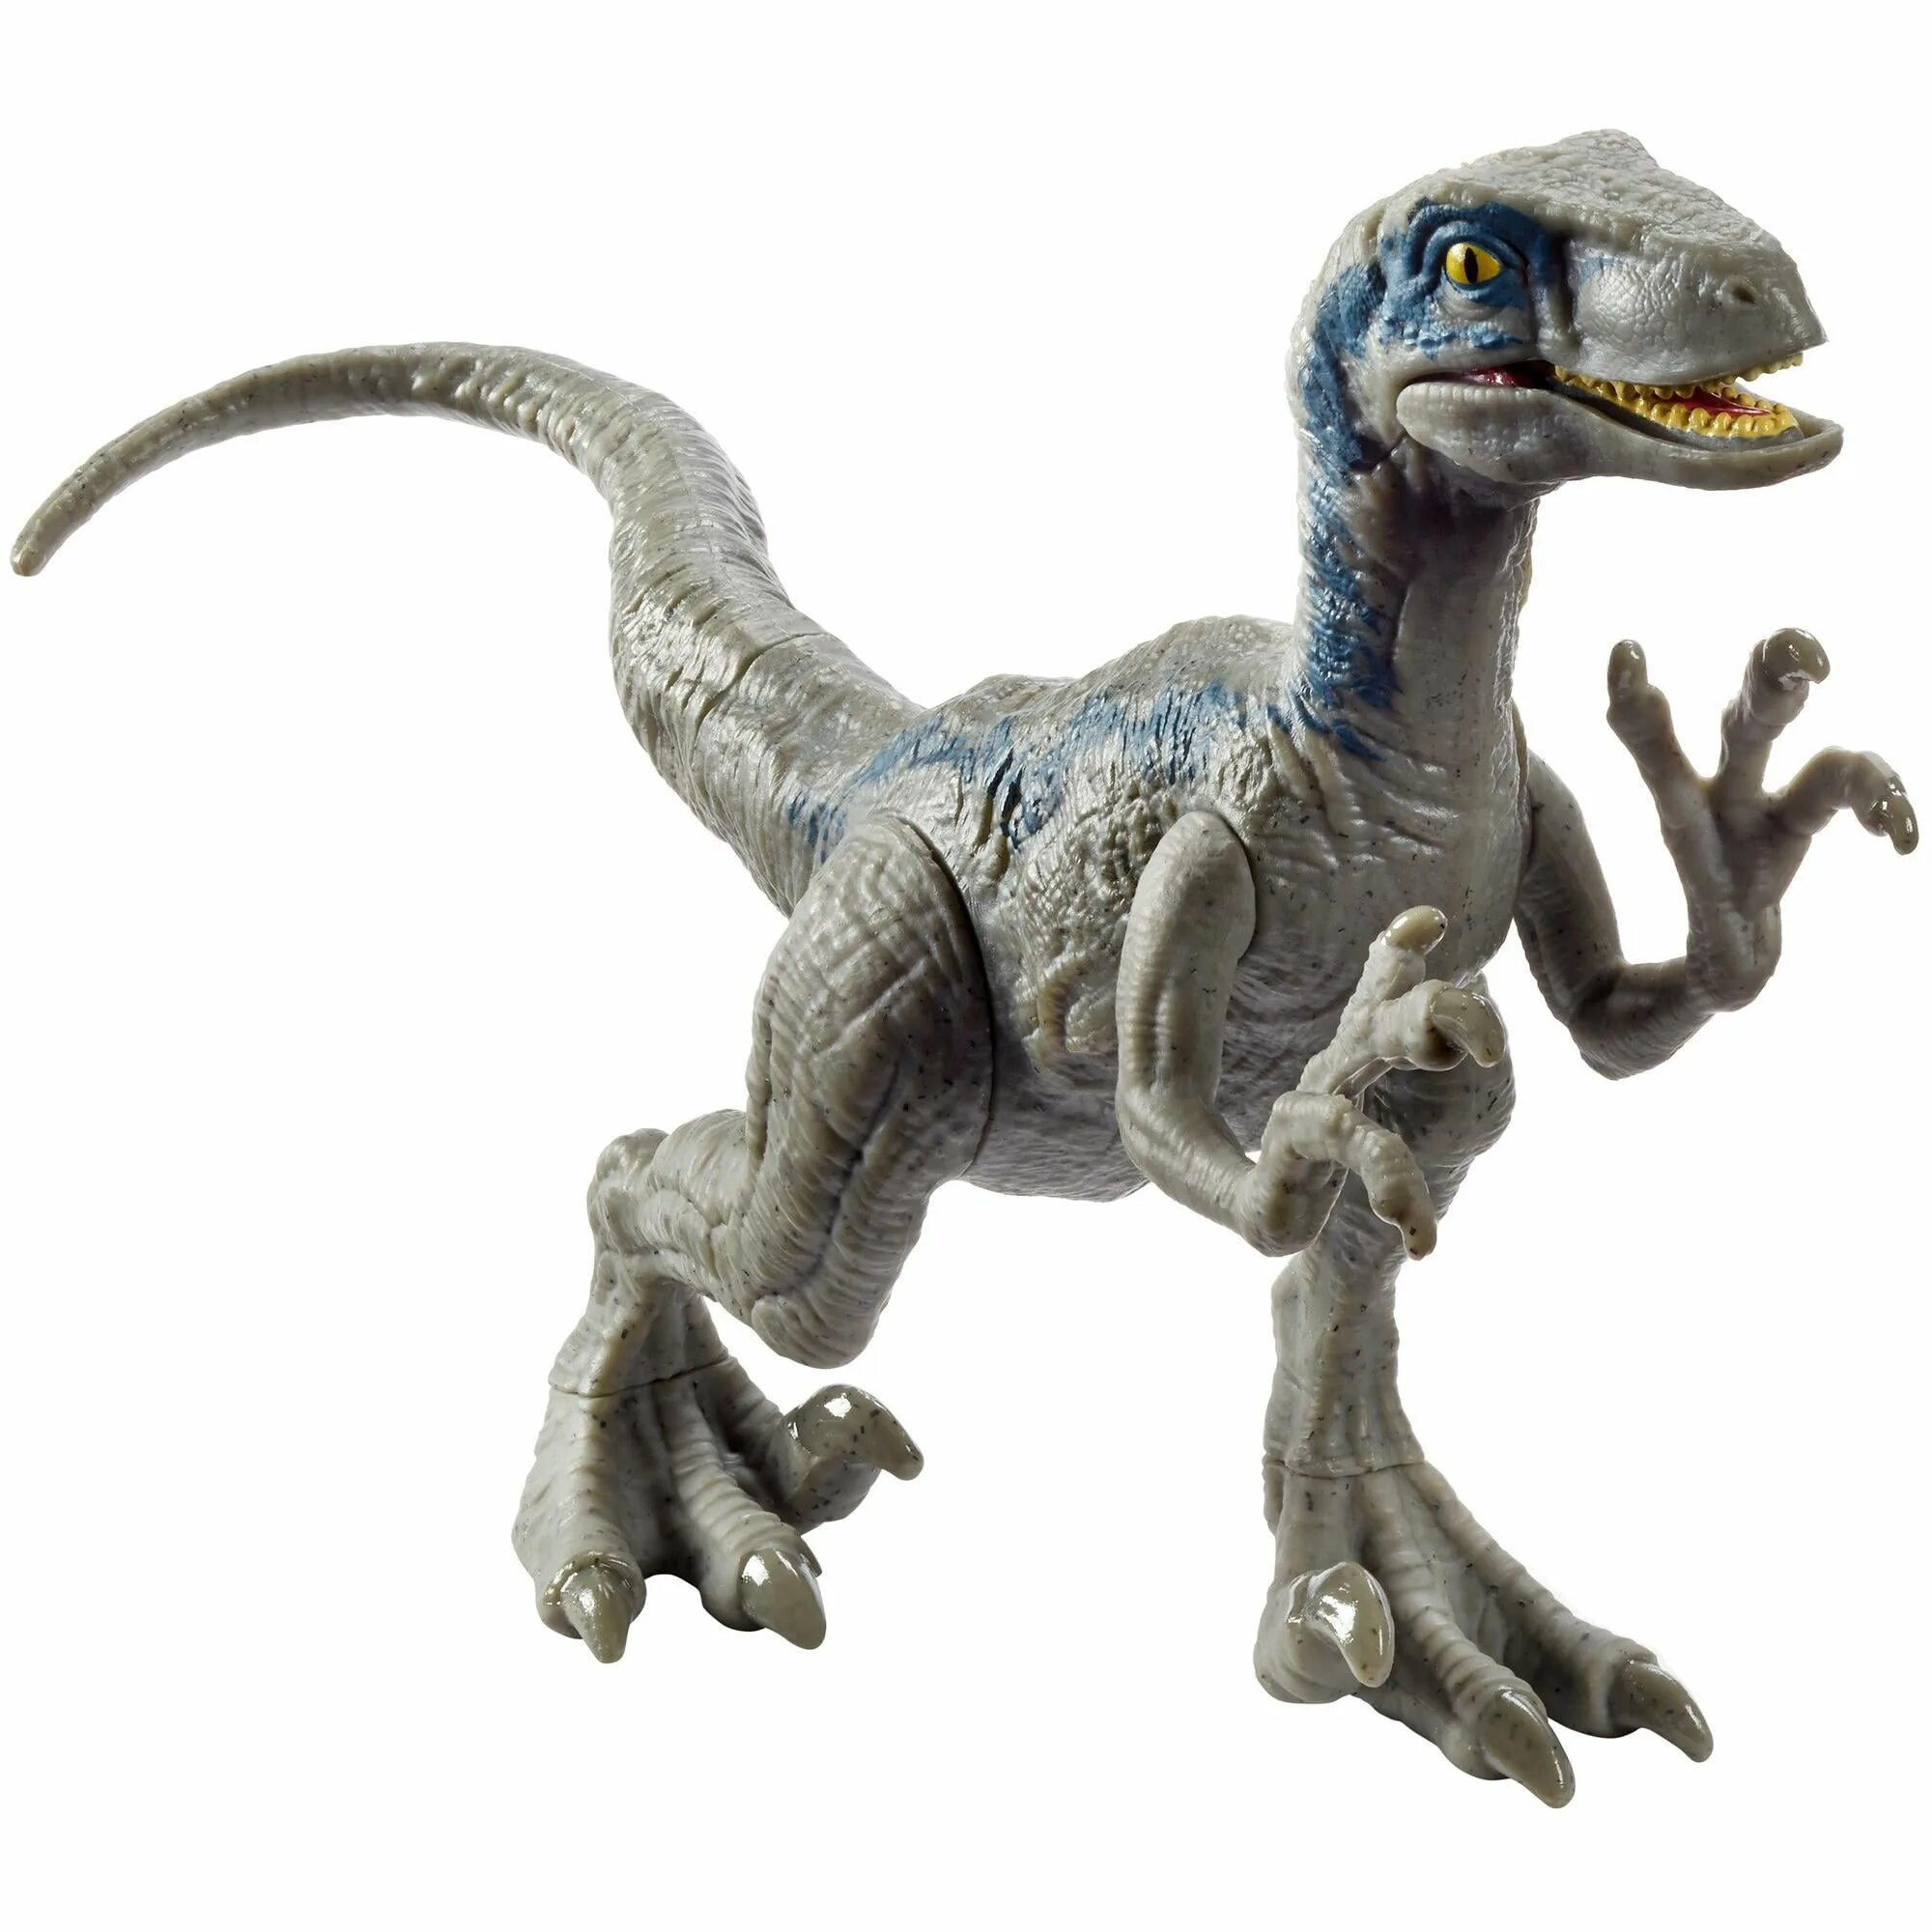 Динозавр велоцераптор. Jurassic World игрушки Velociraptor Blue. Фигурка Велоцираптор Блю. Мир Юрского периода 2 Велоцираптор. Mattel Jurassic World Раптор Блю.